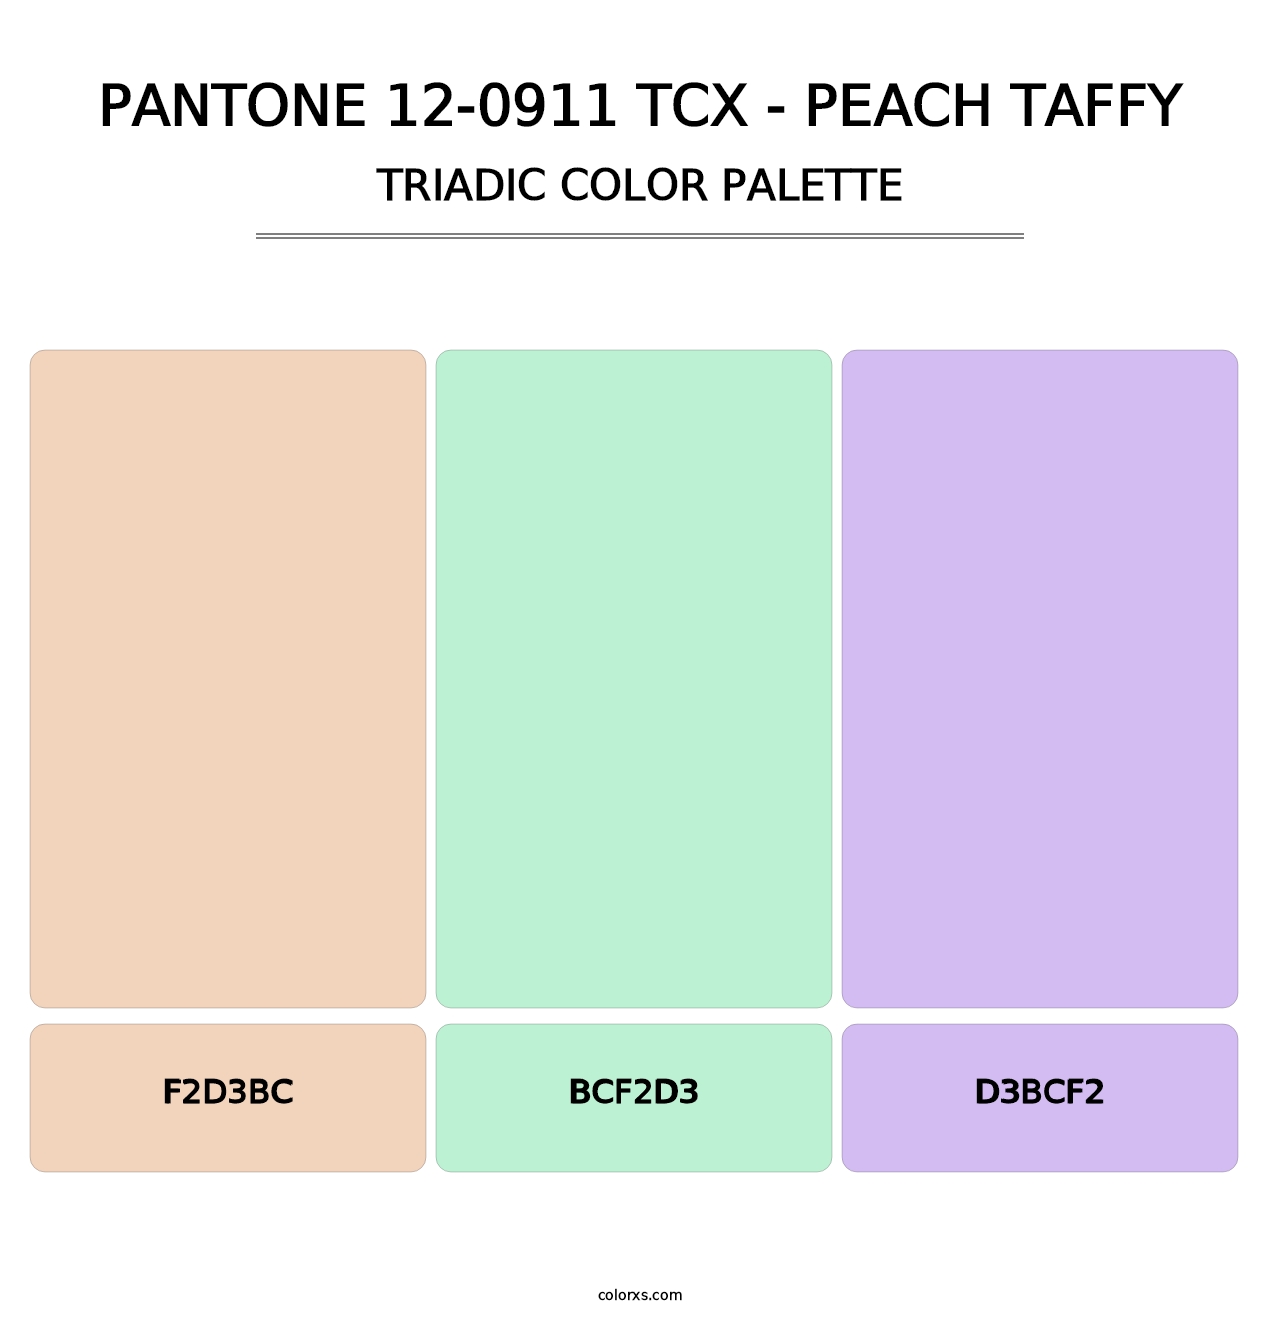 PANTONE 12-0911 TCX - Peach Taffy - Triadic Color Palette